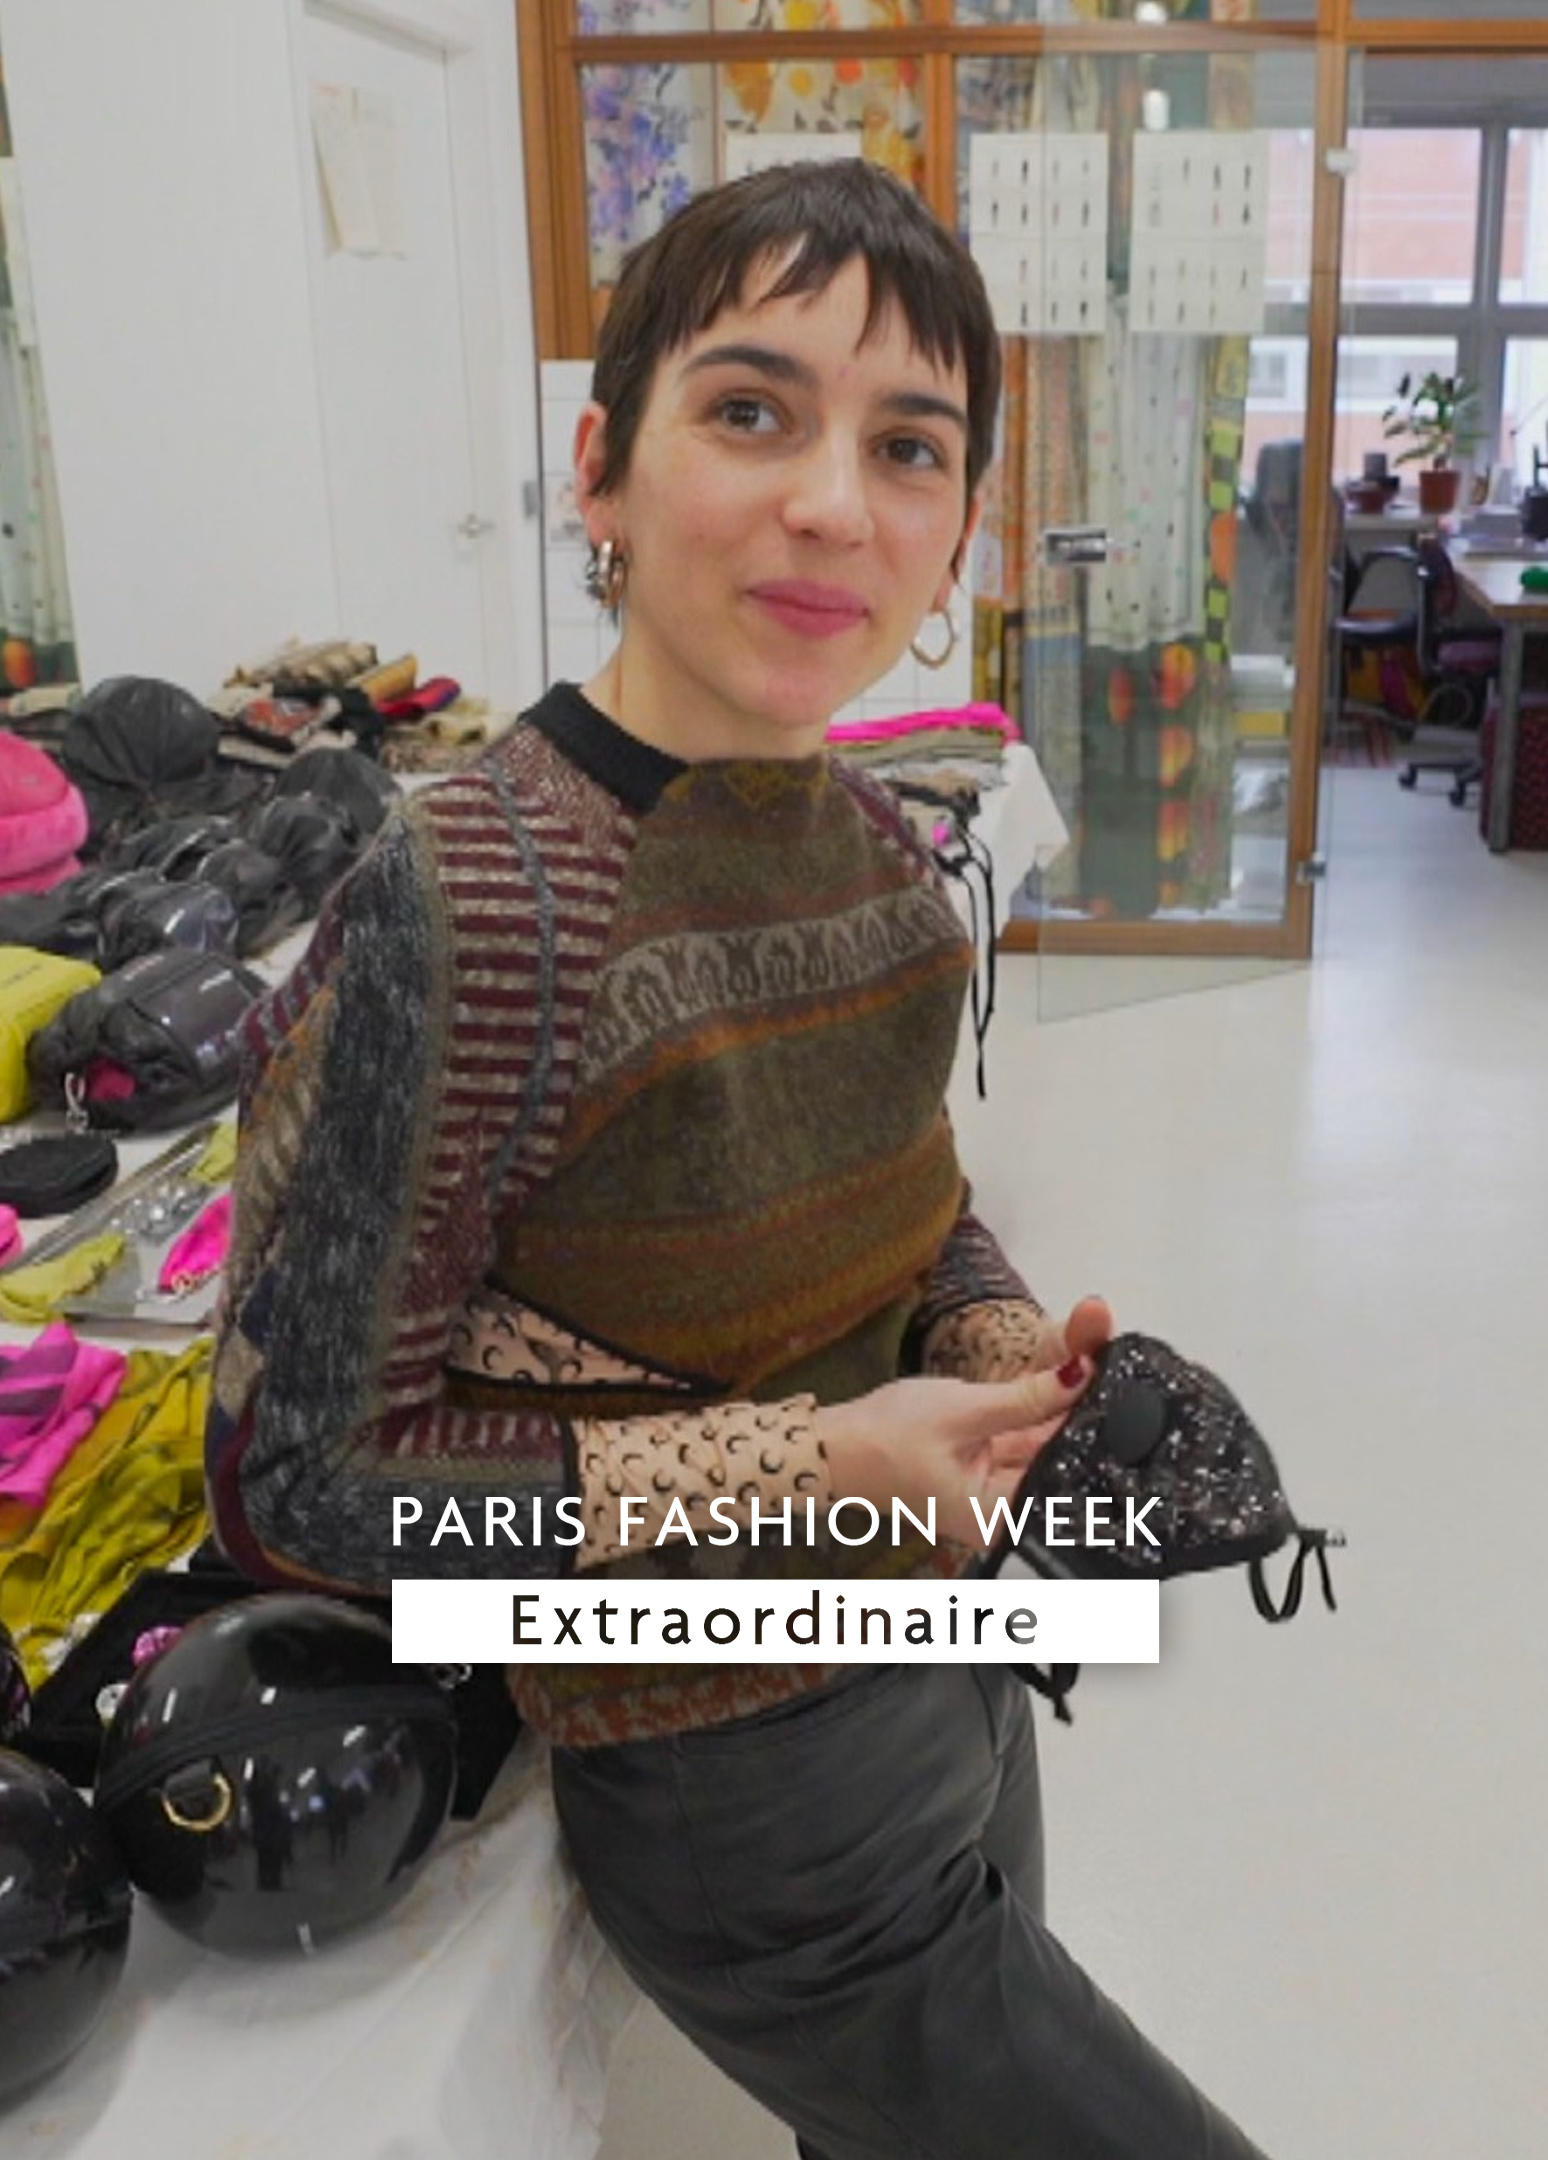 Paris Fashion Week - Extraordinaire